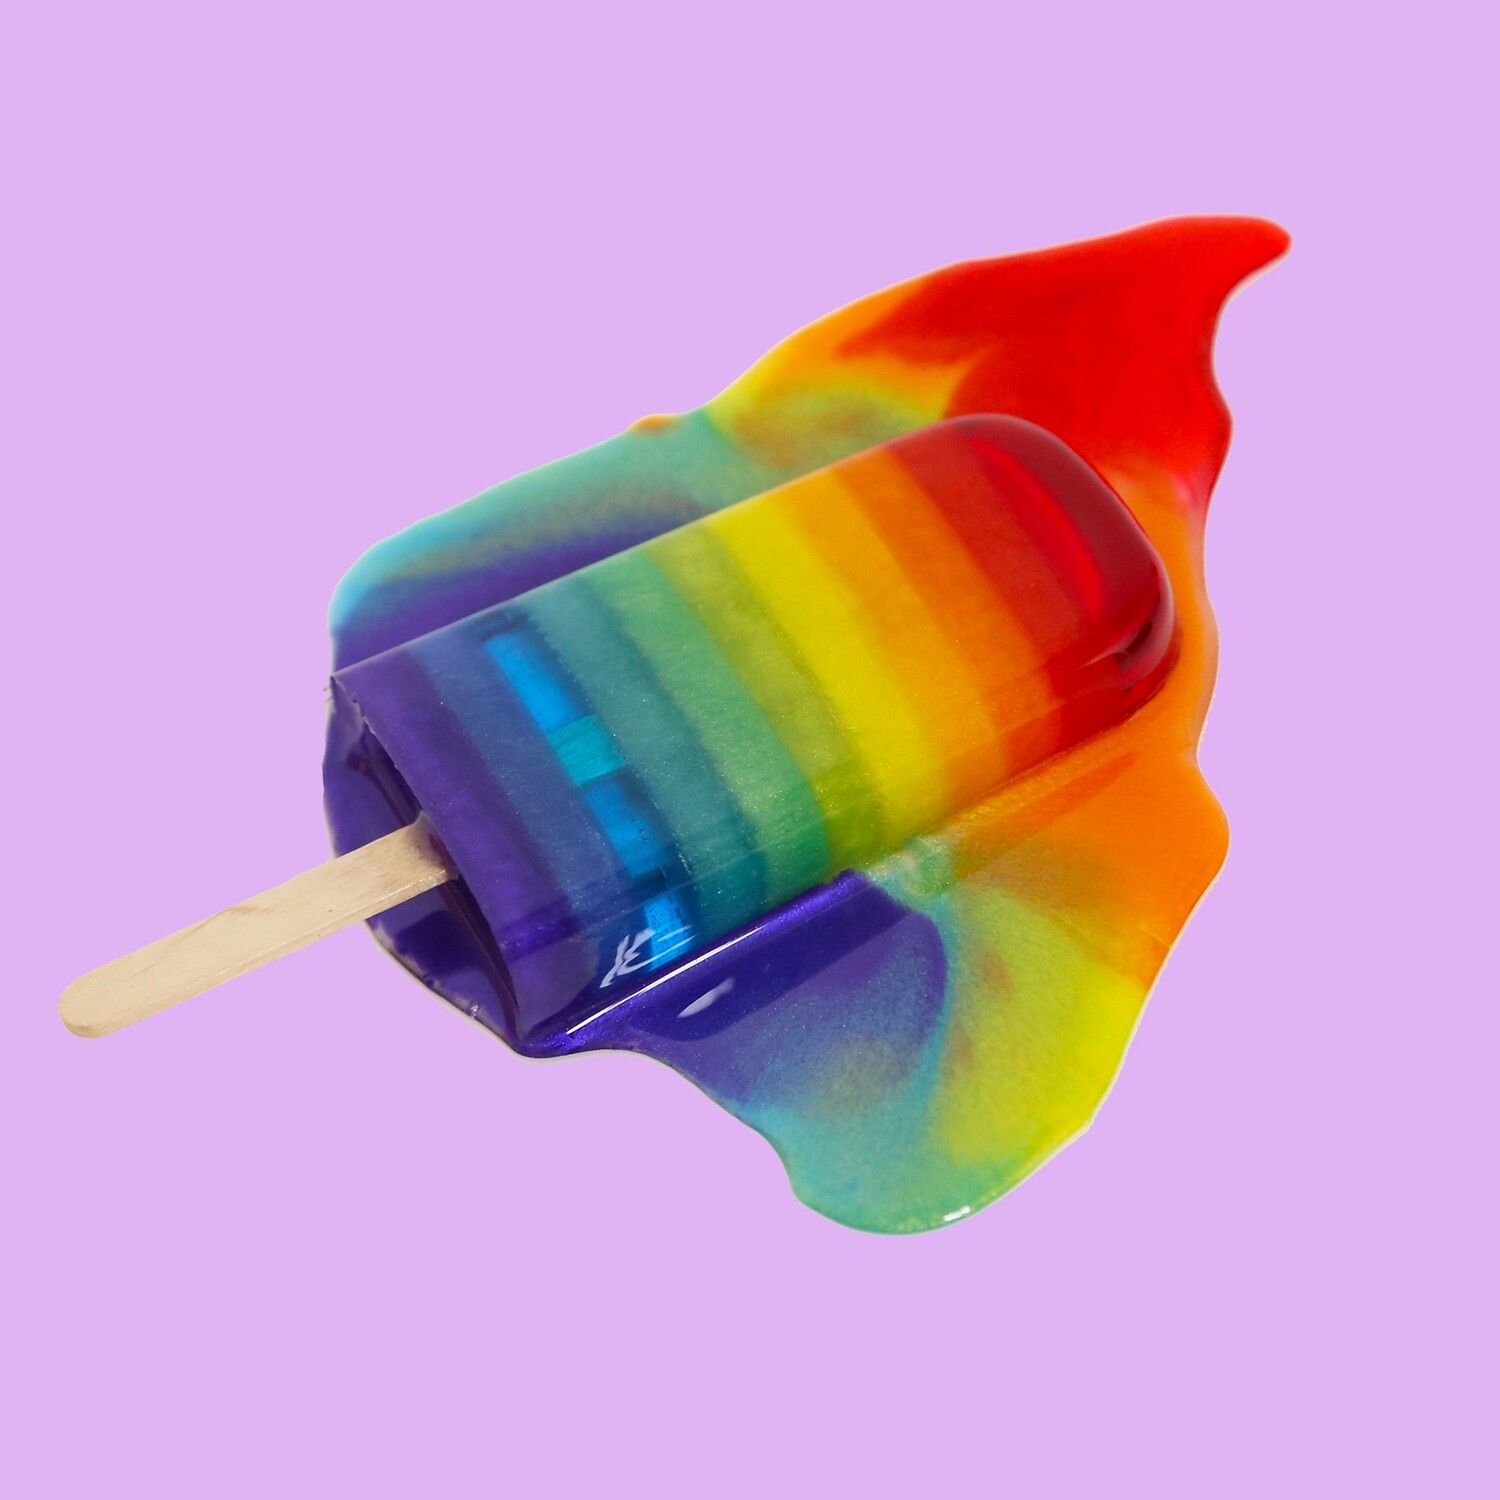 Melting Popsicle Art - Double Rainbow Splat - Original Melting Pops